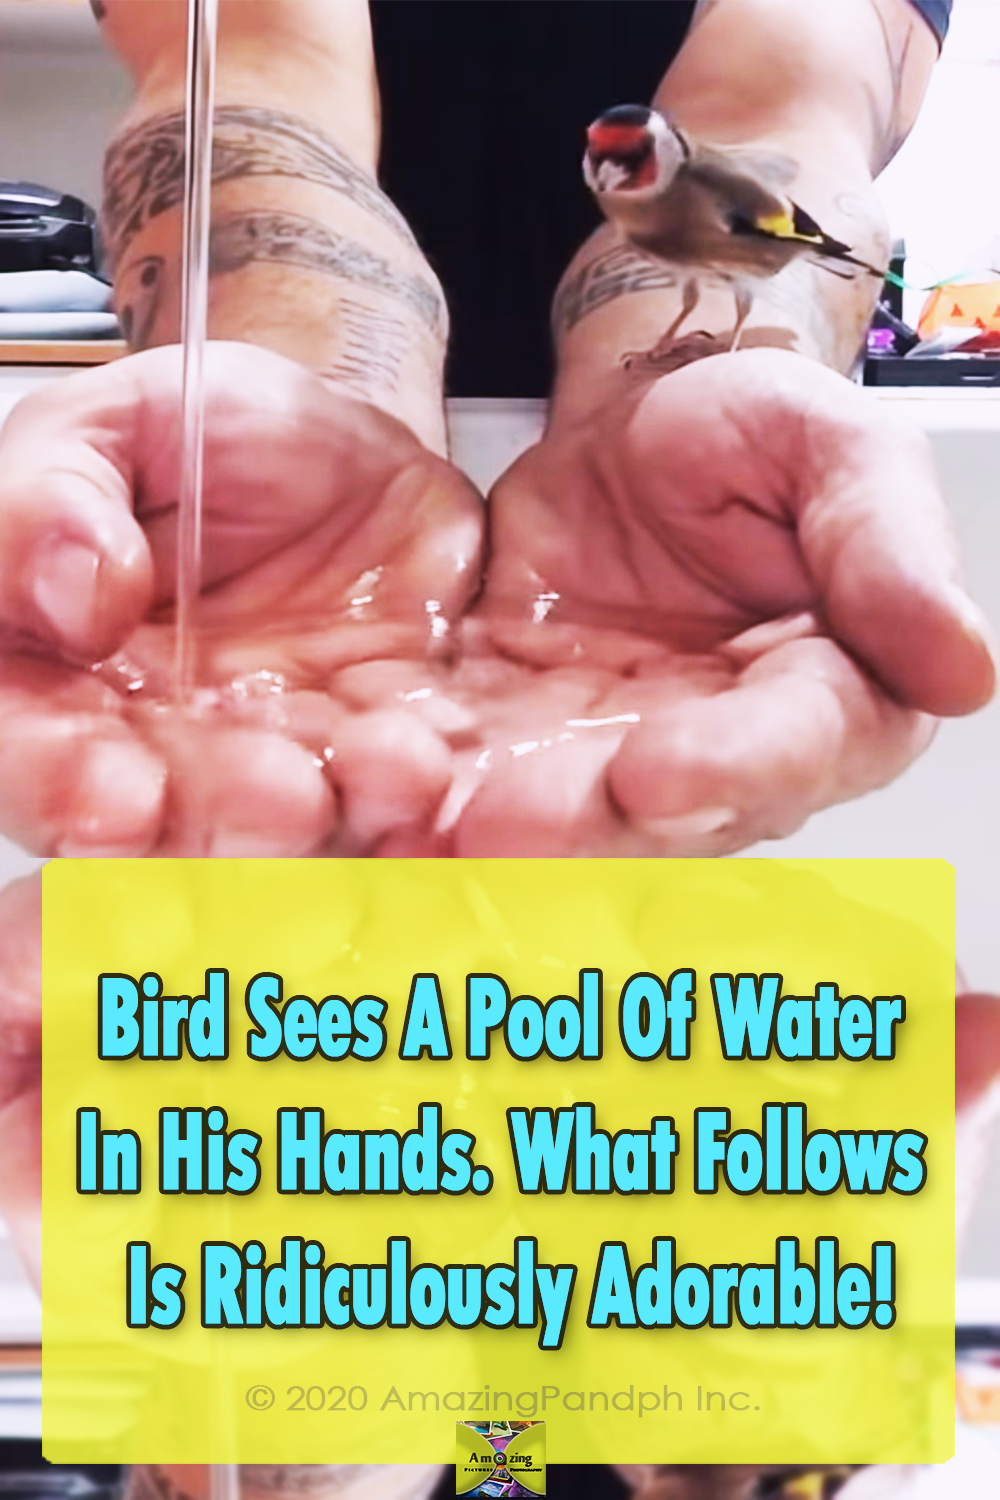 Birds, animals, trust, pool, bath, hands, amazing,